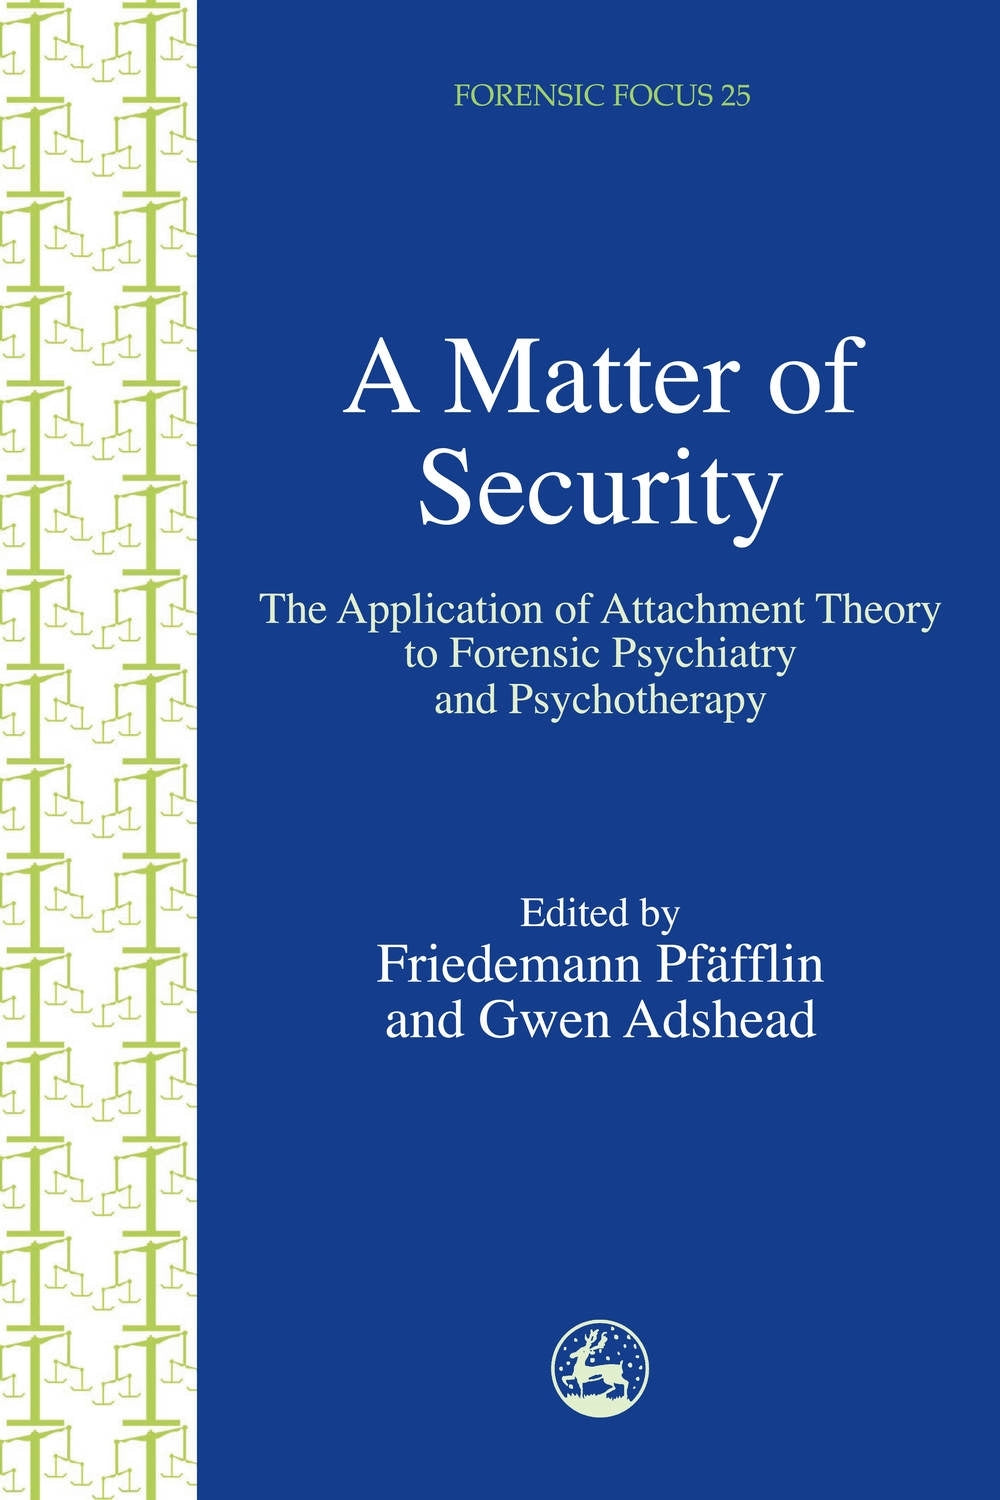 A Matter of Security by Dr Gwen Adshead, Friedemann Pfafflin, No Author Listed